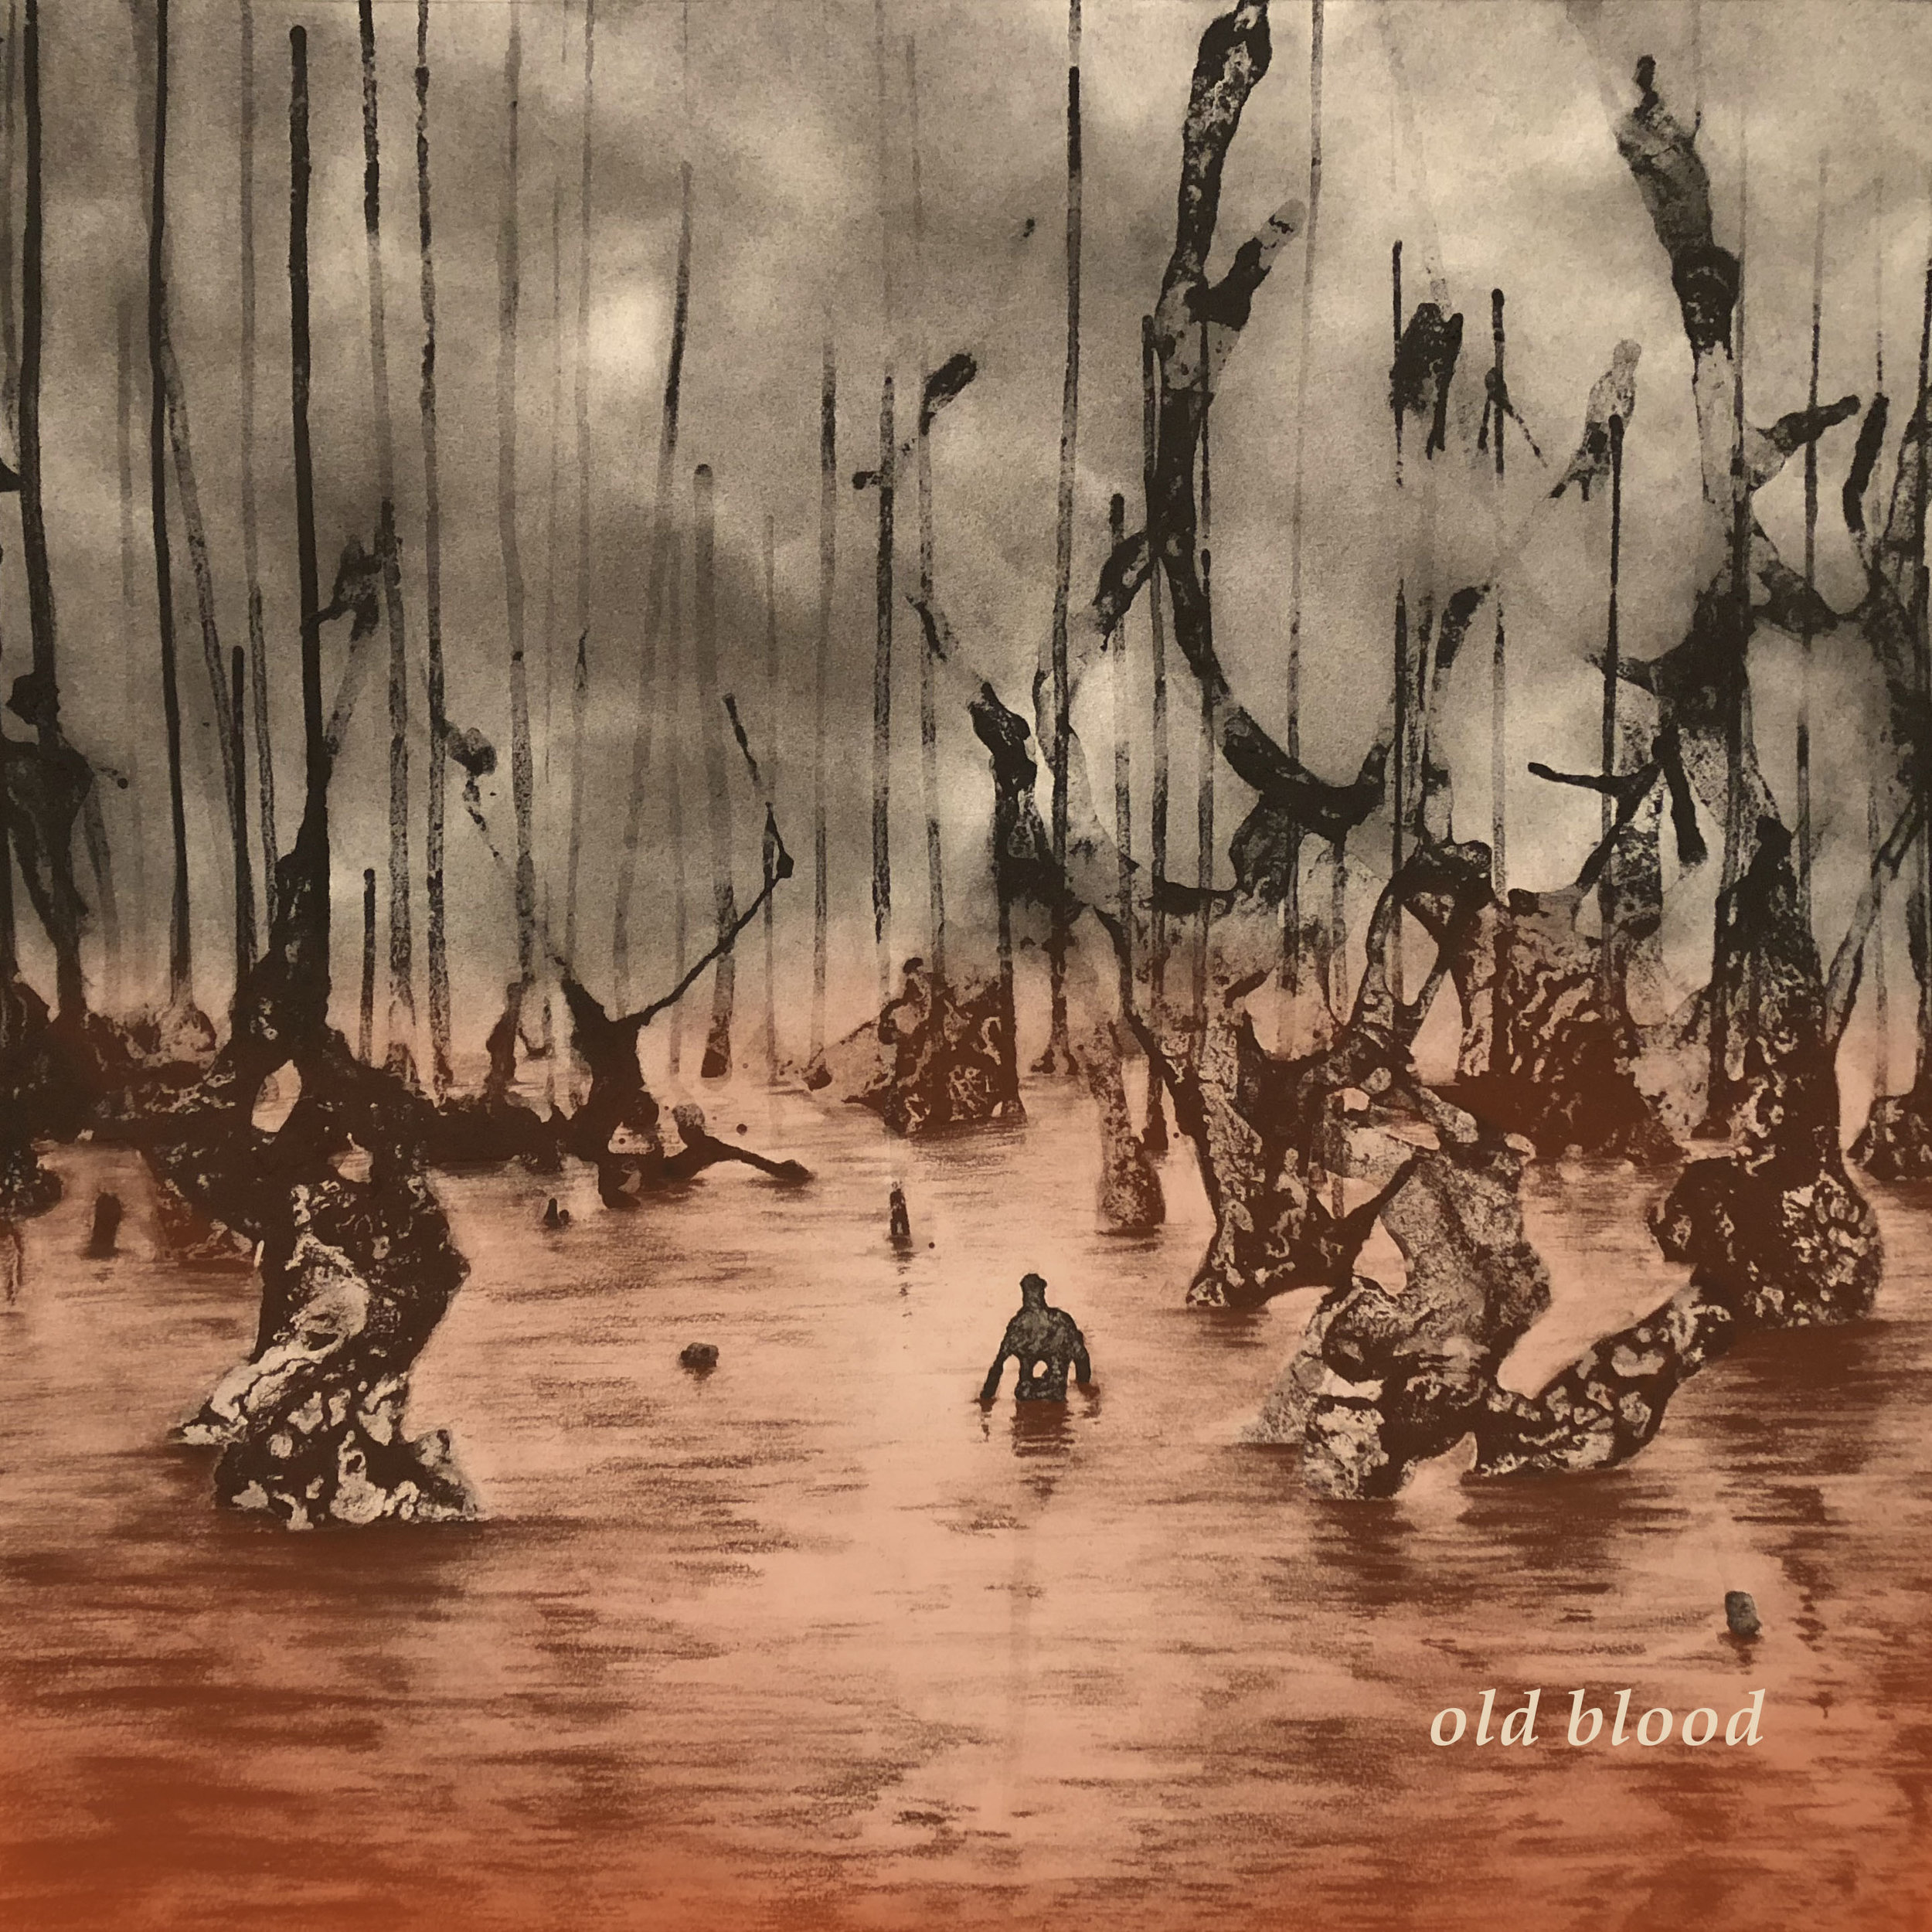 old blood album cover.jpg